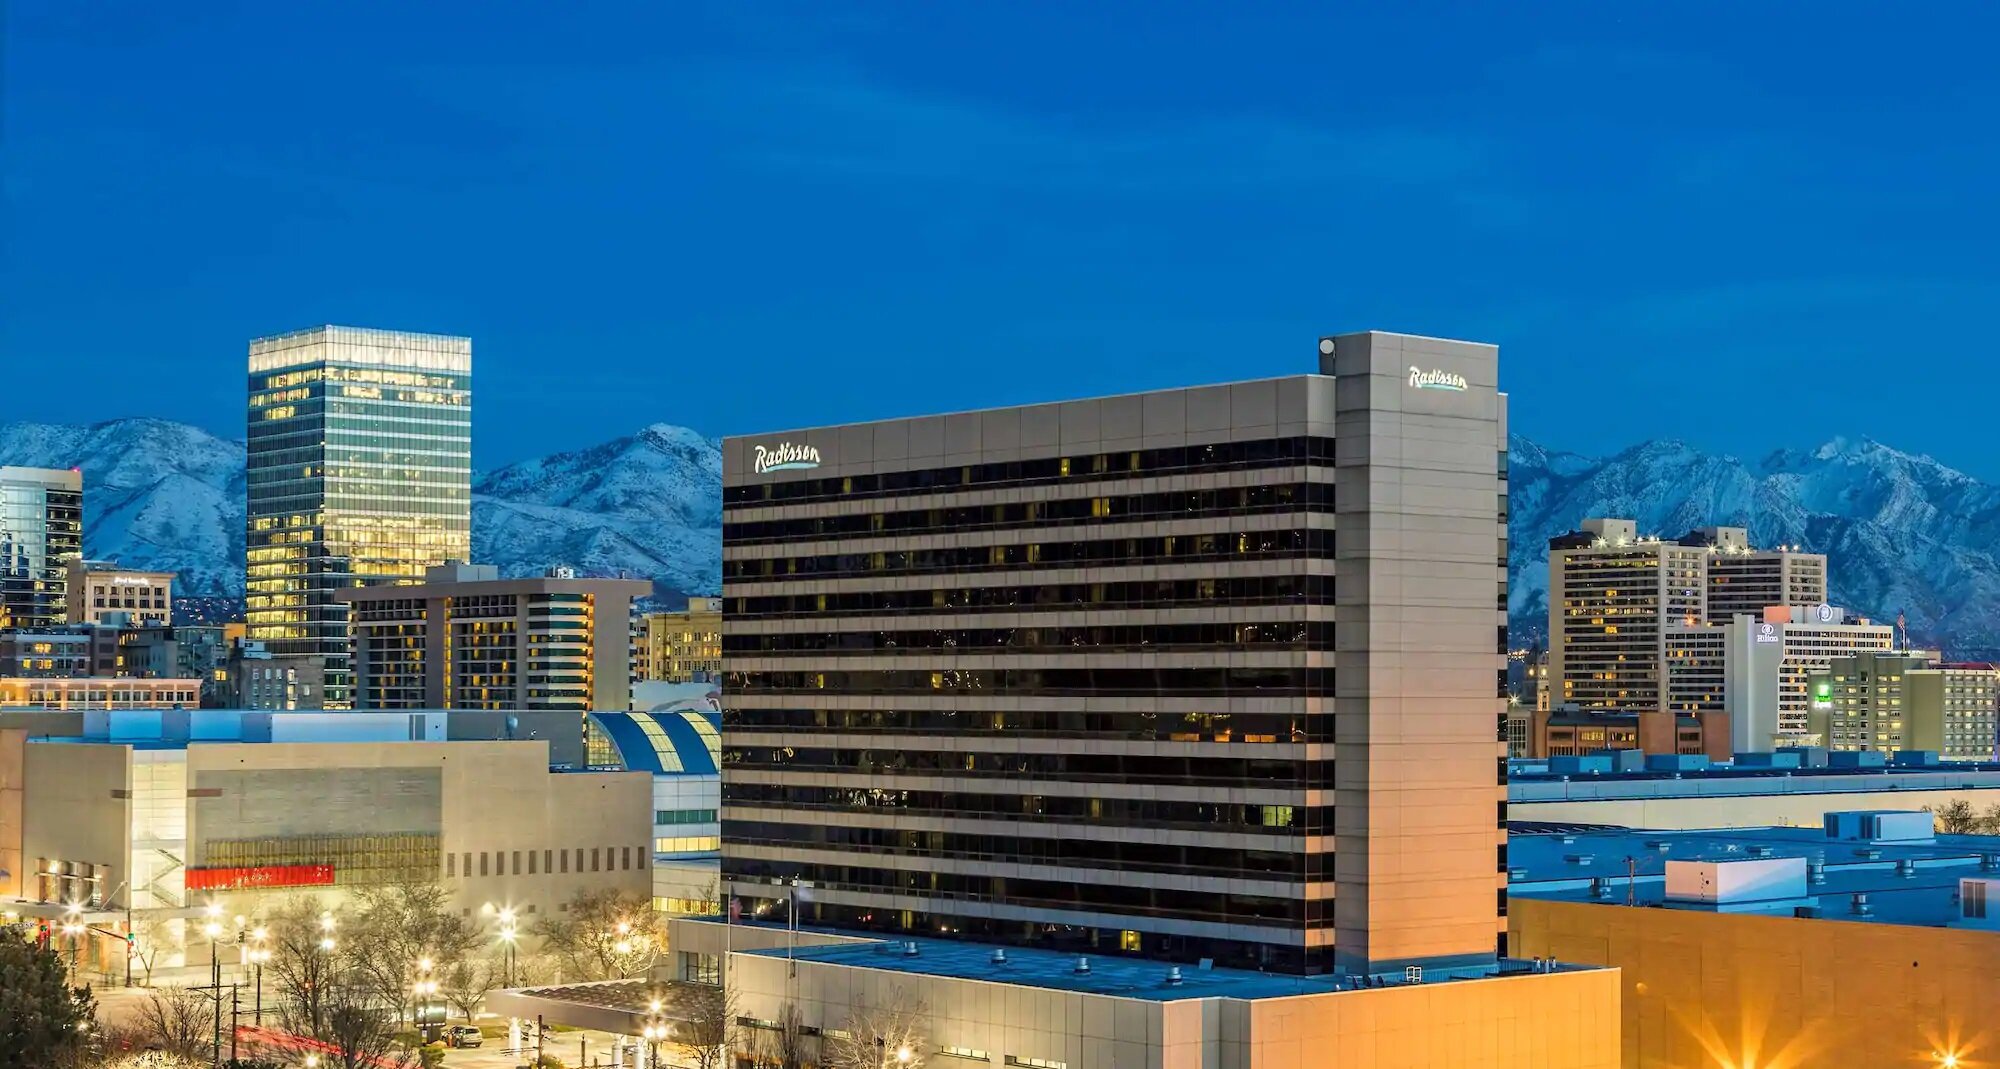 Photo of Radisson Hotel against the Salt Lake City skyline at dusk